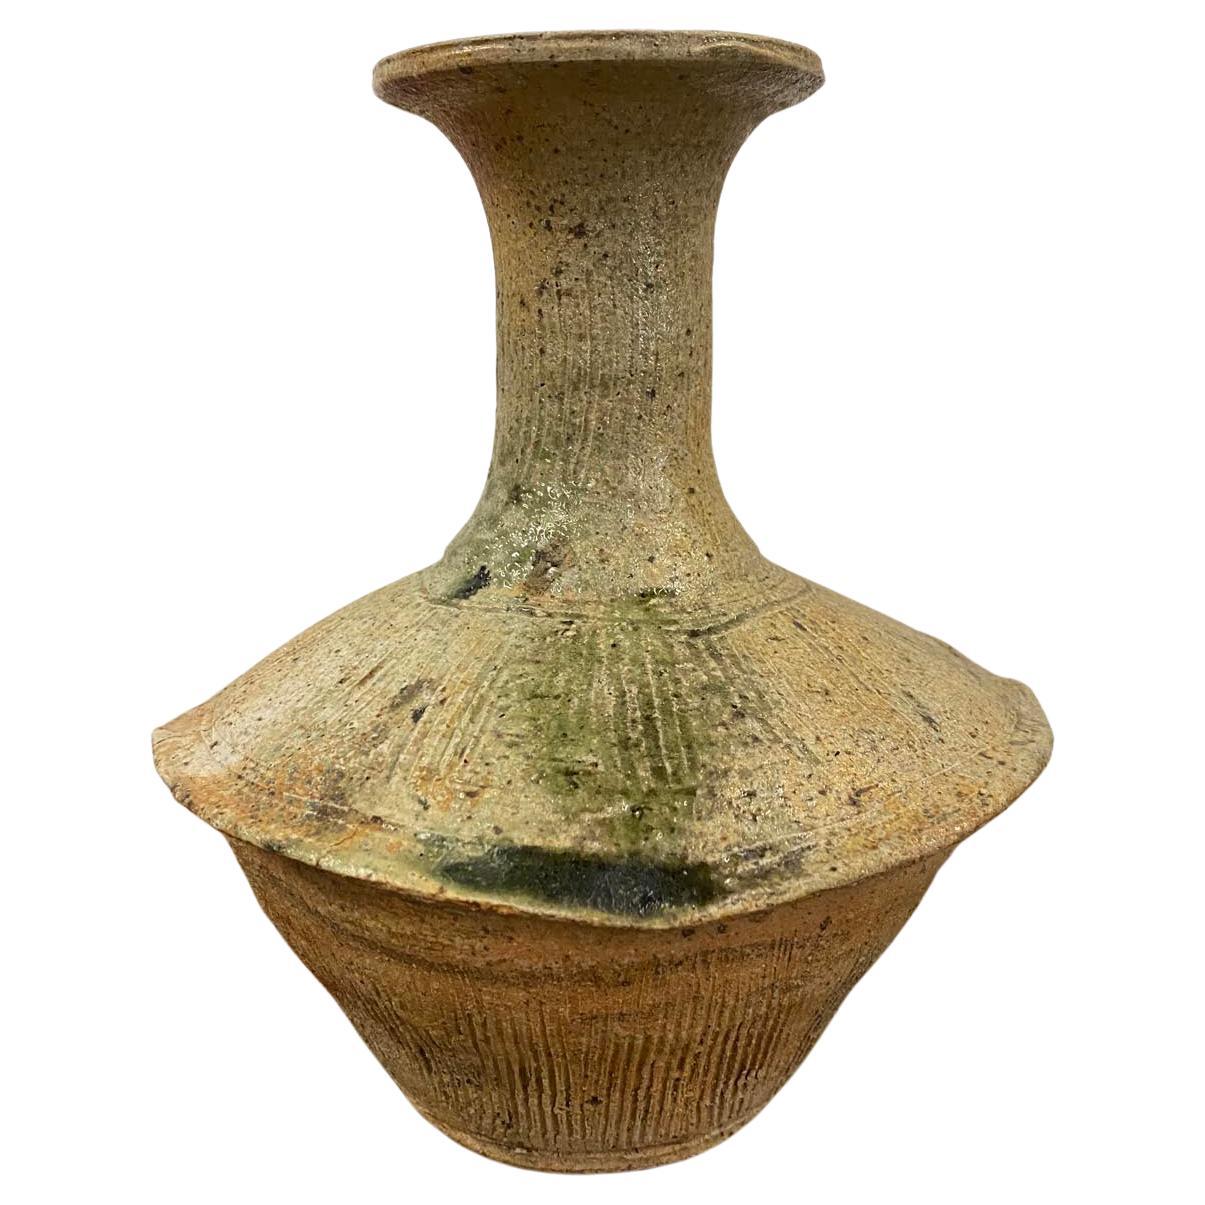 Japanese Bizen Ware Pottery Vessel